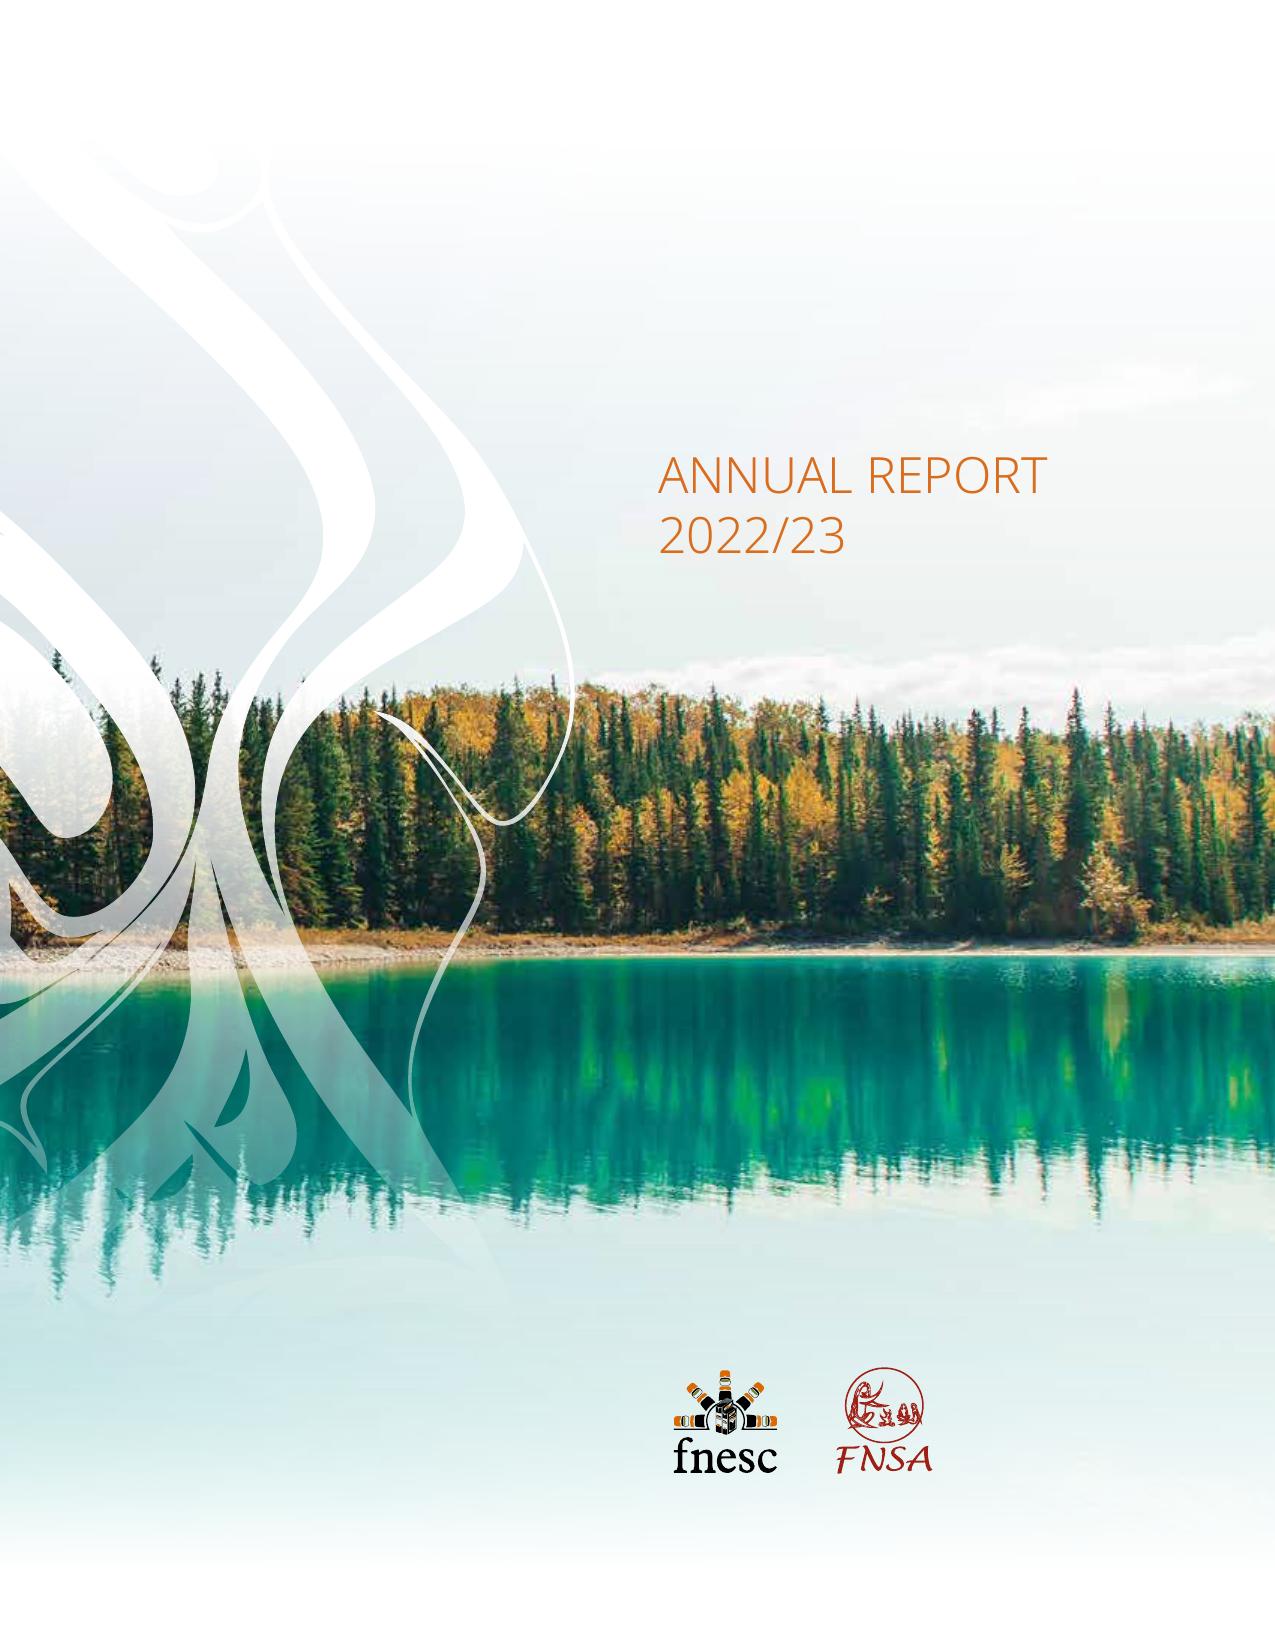 FNESC 2024 Annual Report